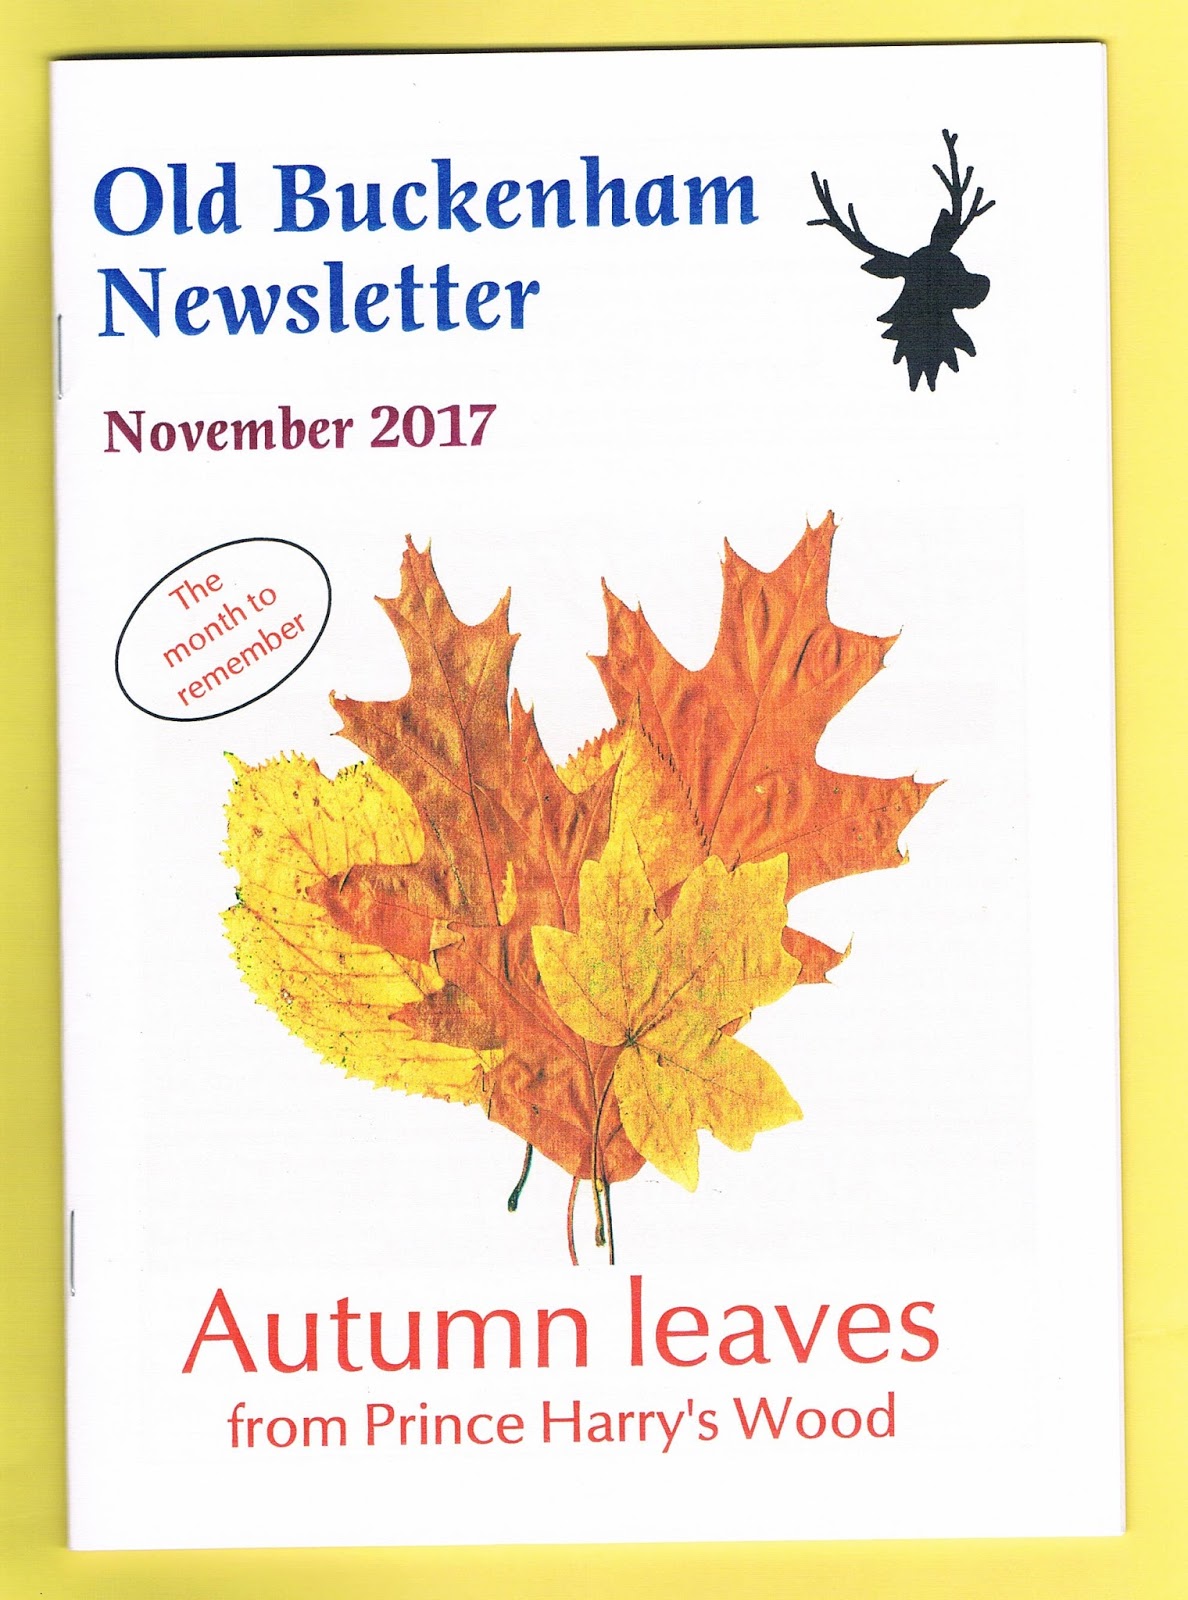 Old Buckenham blog: November newsletter is around in Old Buckenham